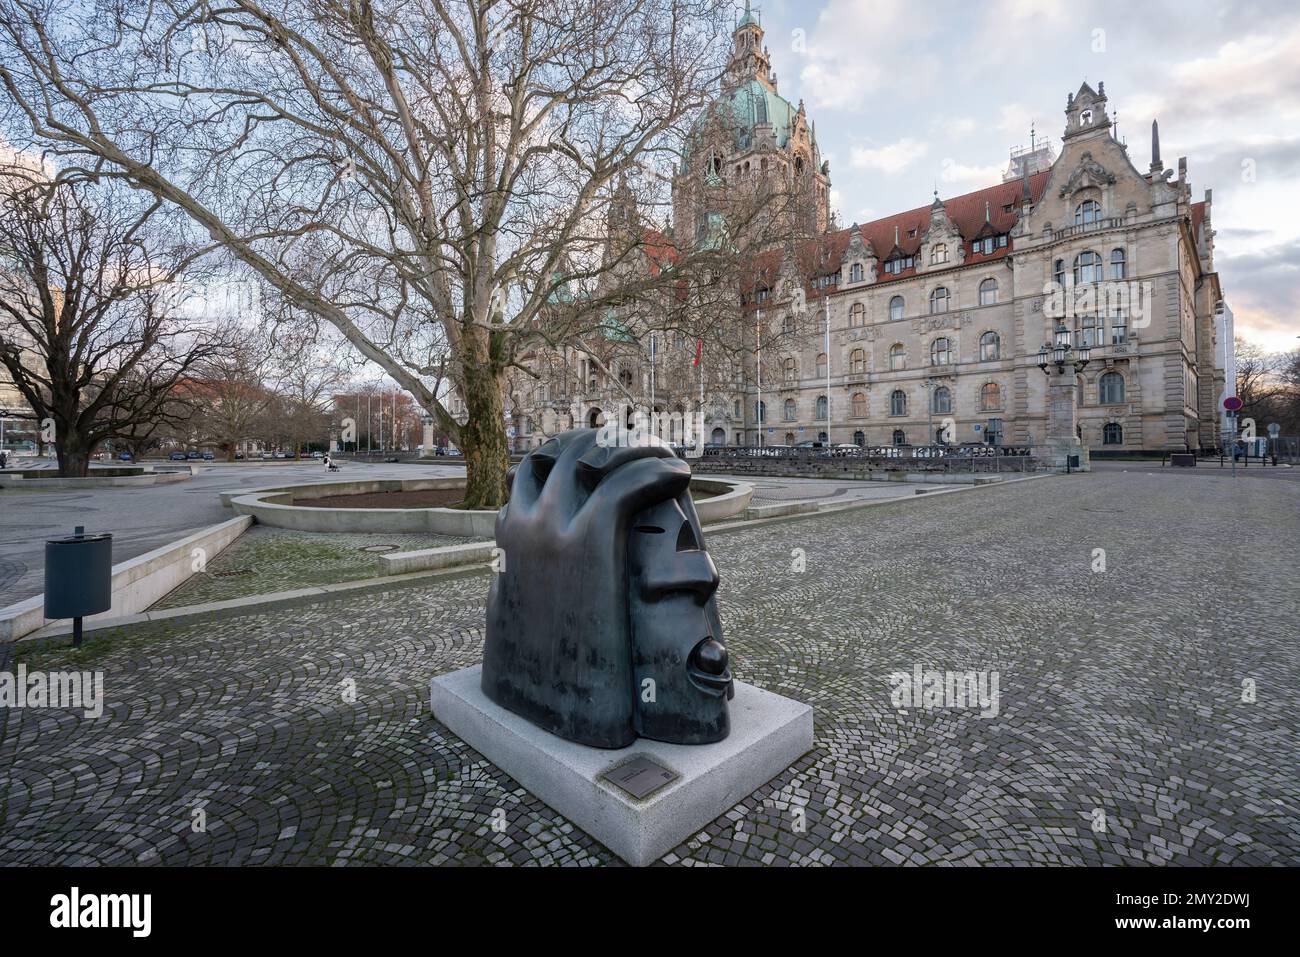 Grosser verletzter Kopf (Big injured head) Sculpture by Rainer Kriester with New Town Hall - Hanover, Lower Saxony, Germany Stock Photo